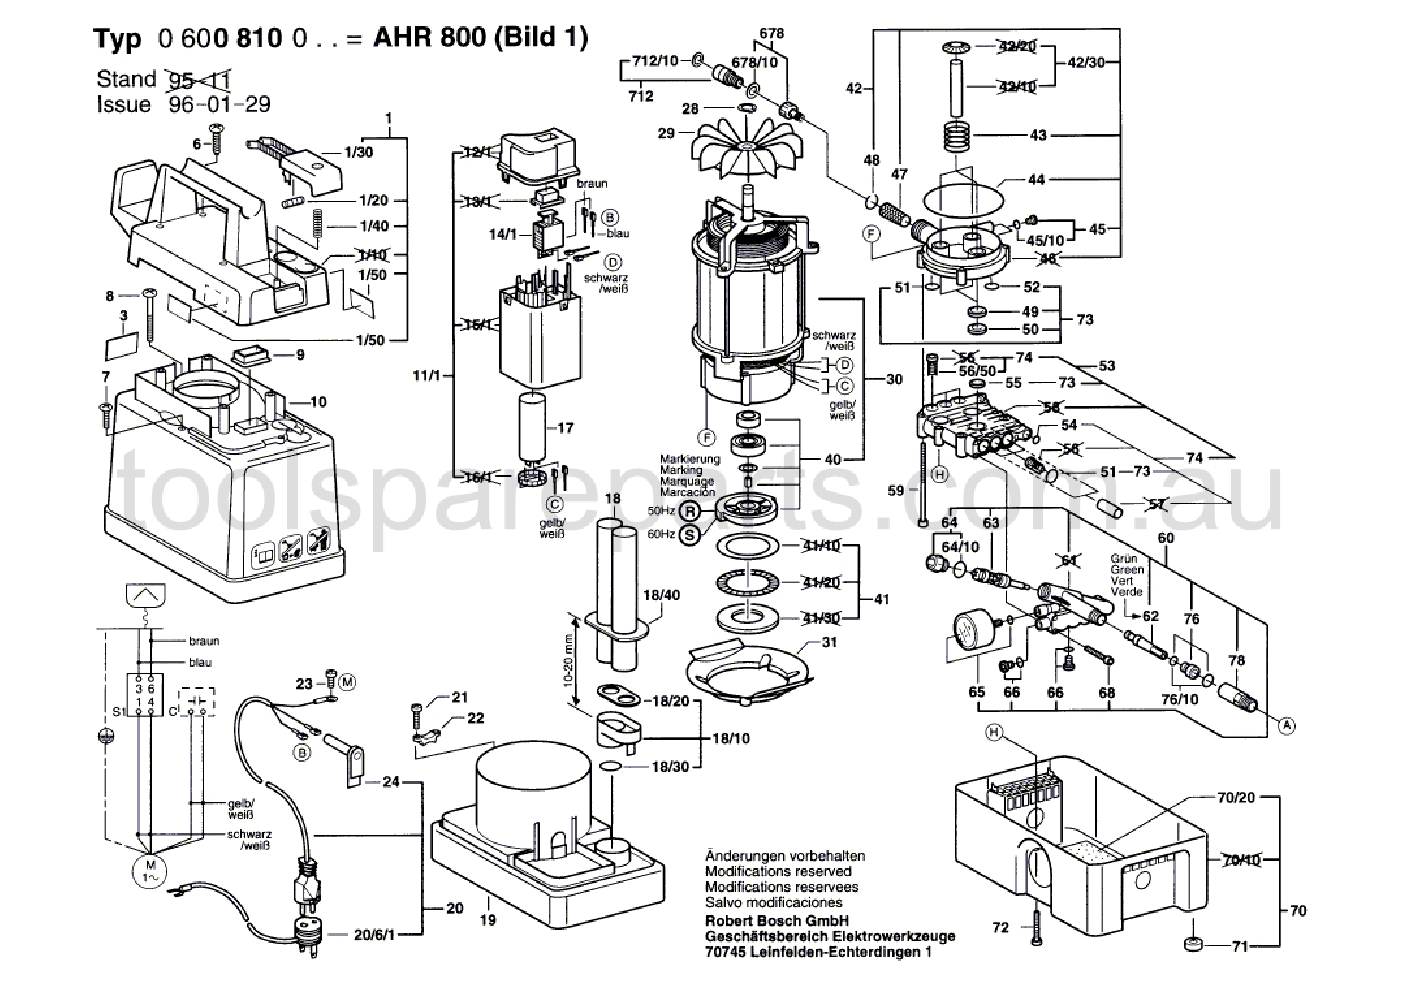 Bosch AHR 800 0600810037  Diagram 1